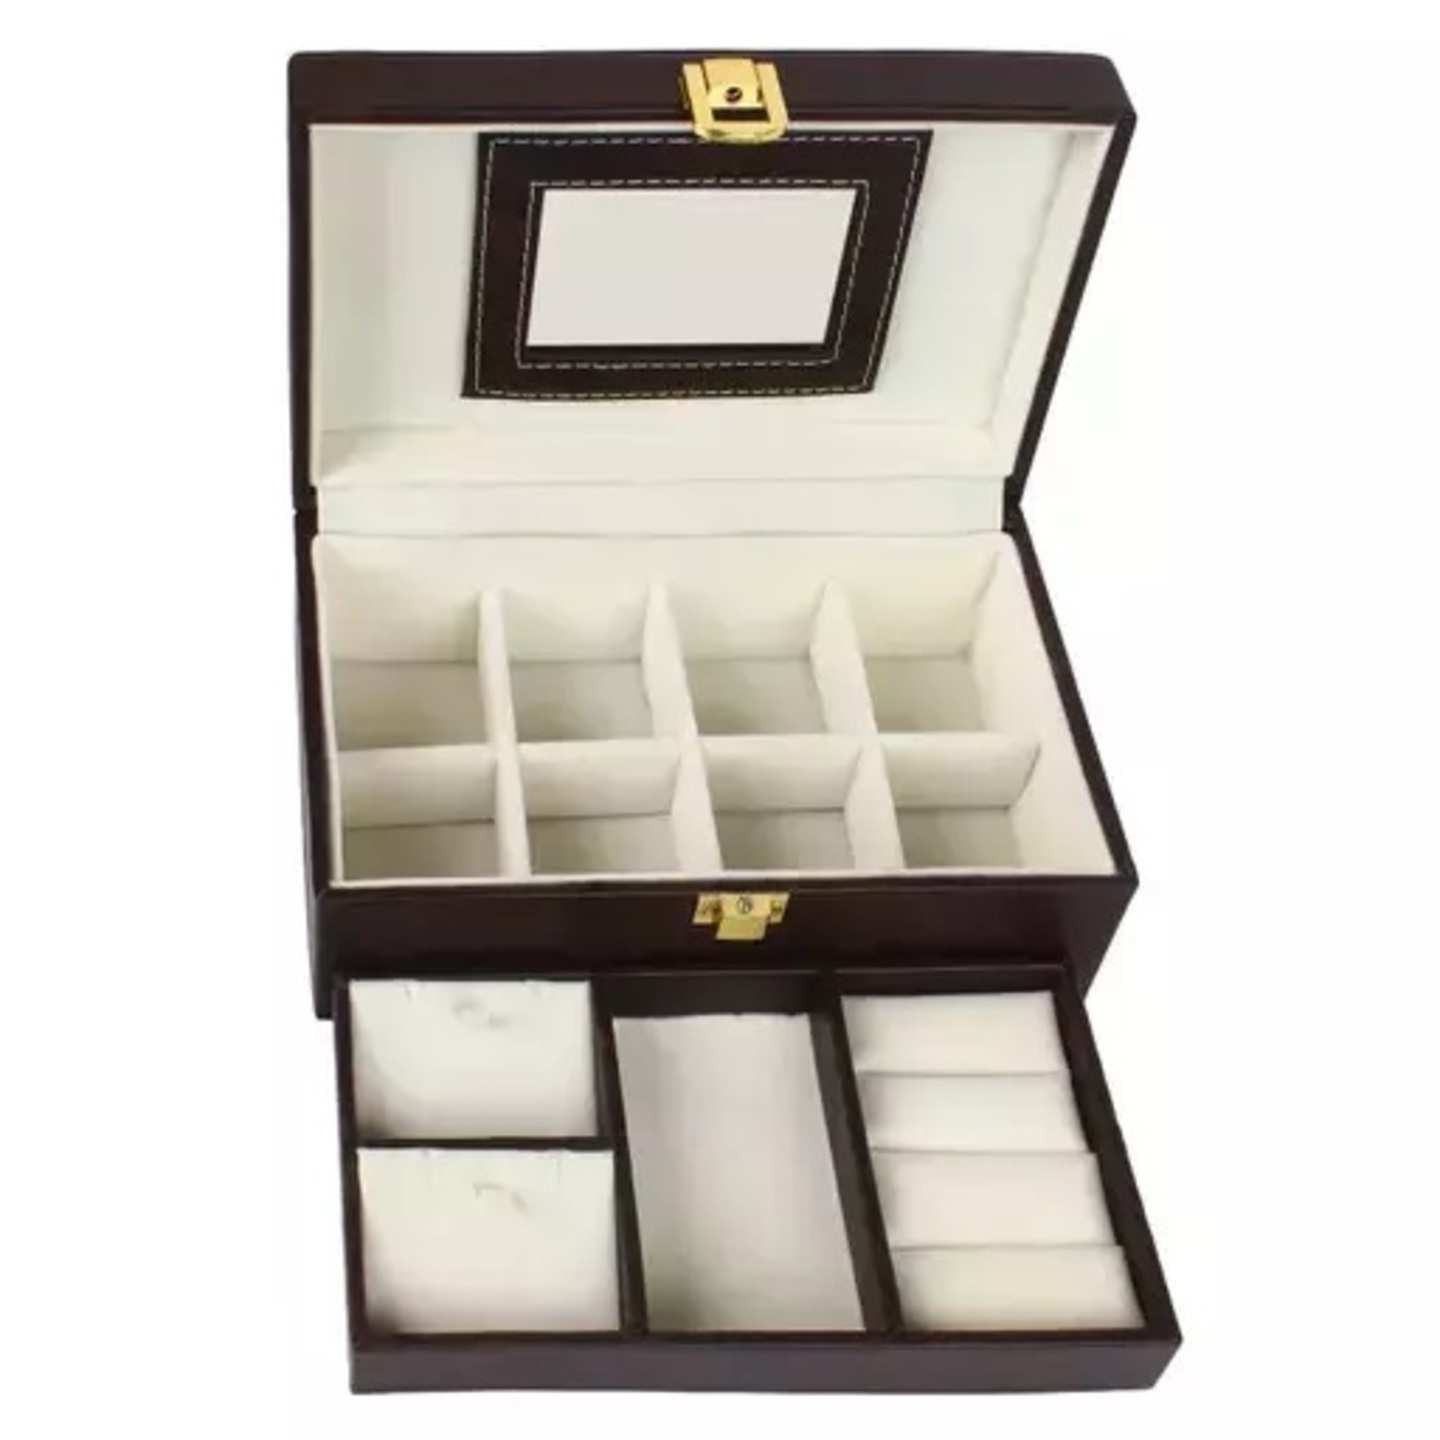 Premium PU Leather Women's Jewellery Box (Coffee Brown)